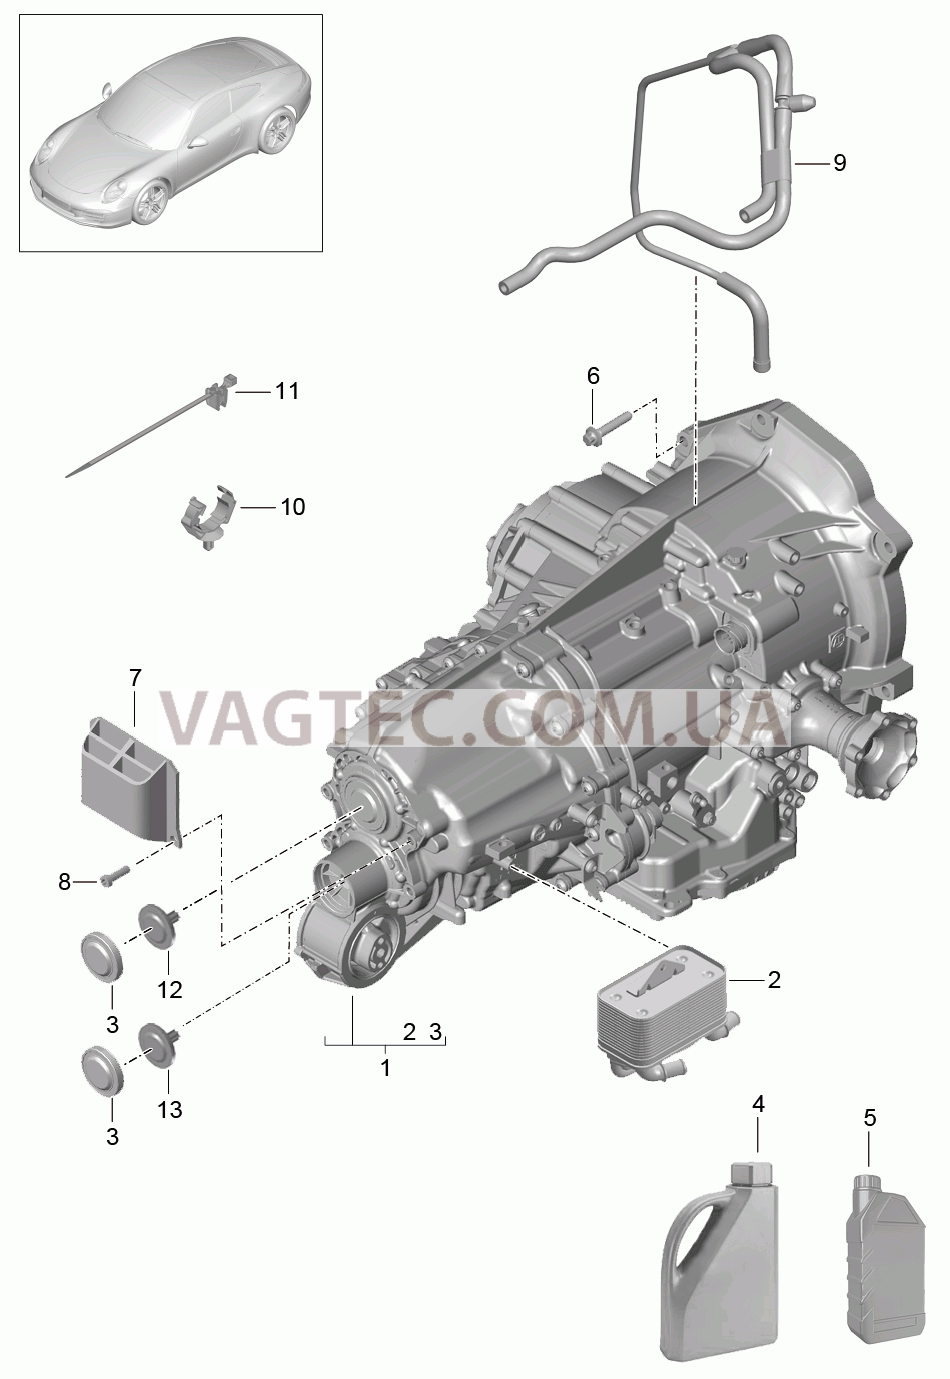 320-000 - PDK -, Коробка переключения передач, Заменная коробка передач
						
						CG1.05, CG1.35 для PORSCHE 911.Carrera 2012-2016USA